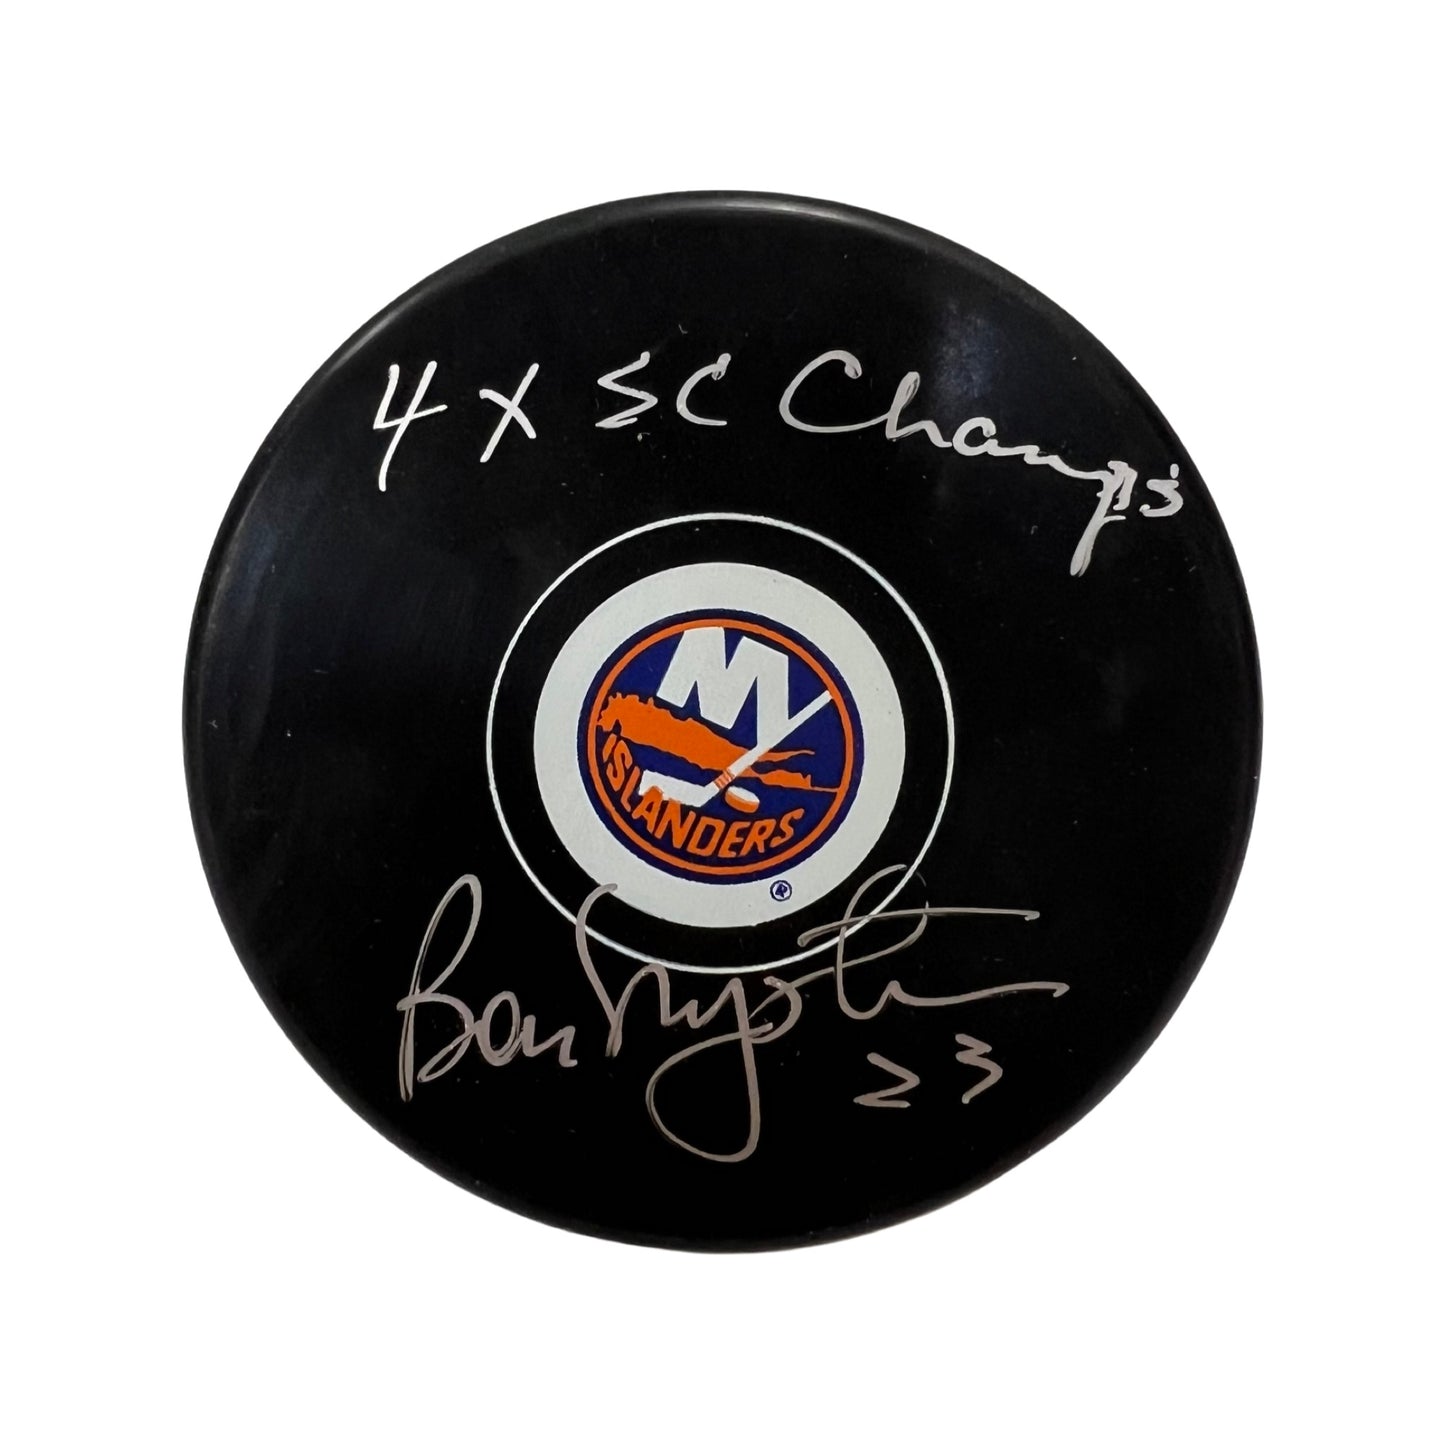 Bob Nystrom Autographed New York Islanders Replica Puck “4x SC Champs” Inscription Steiner CX